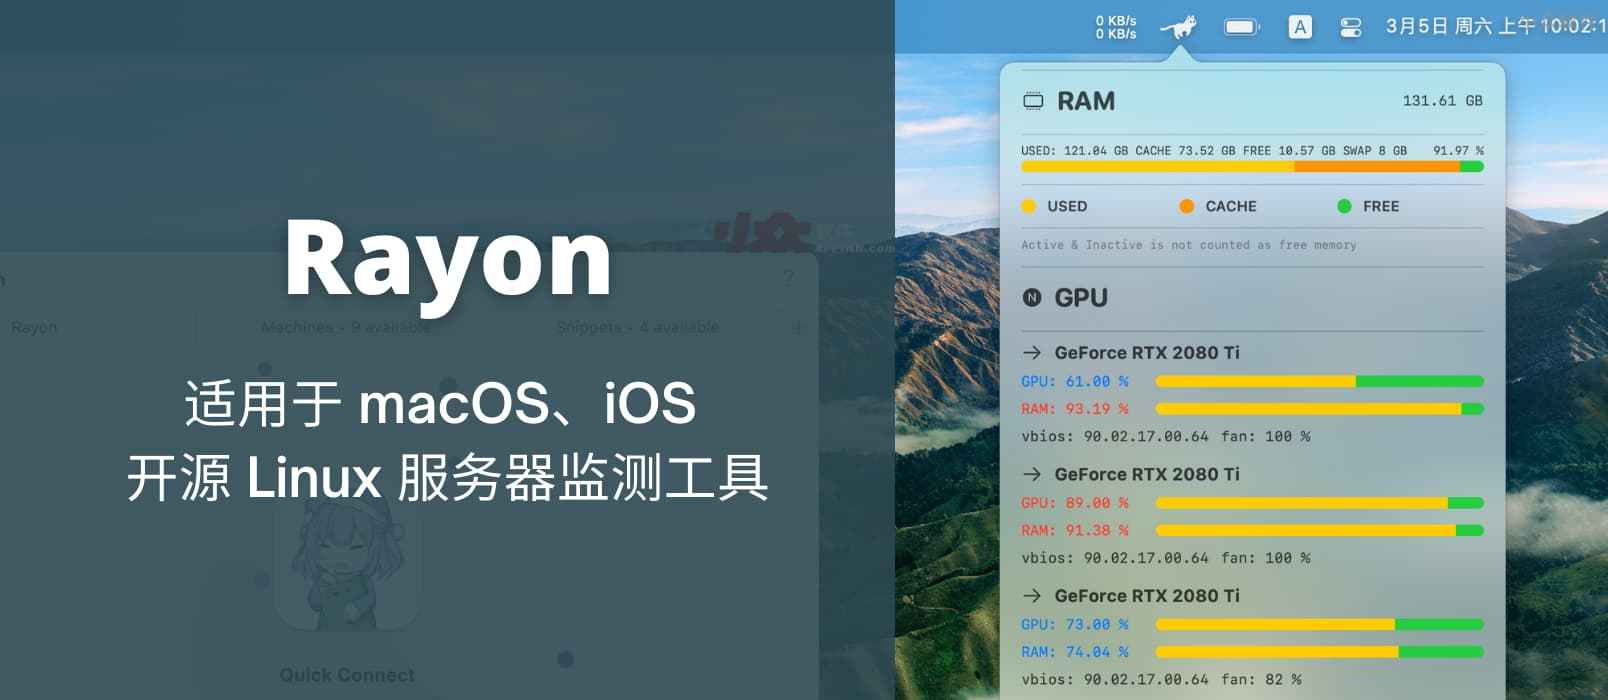 Rayon – 适用于 macOS、iOS 系统的开源 Linux 服务器监控工具，拥有 Snippet 功能